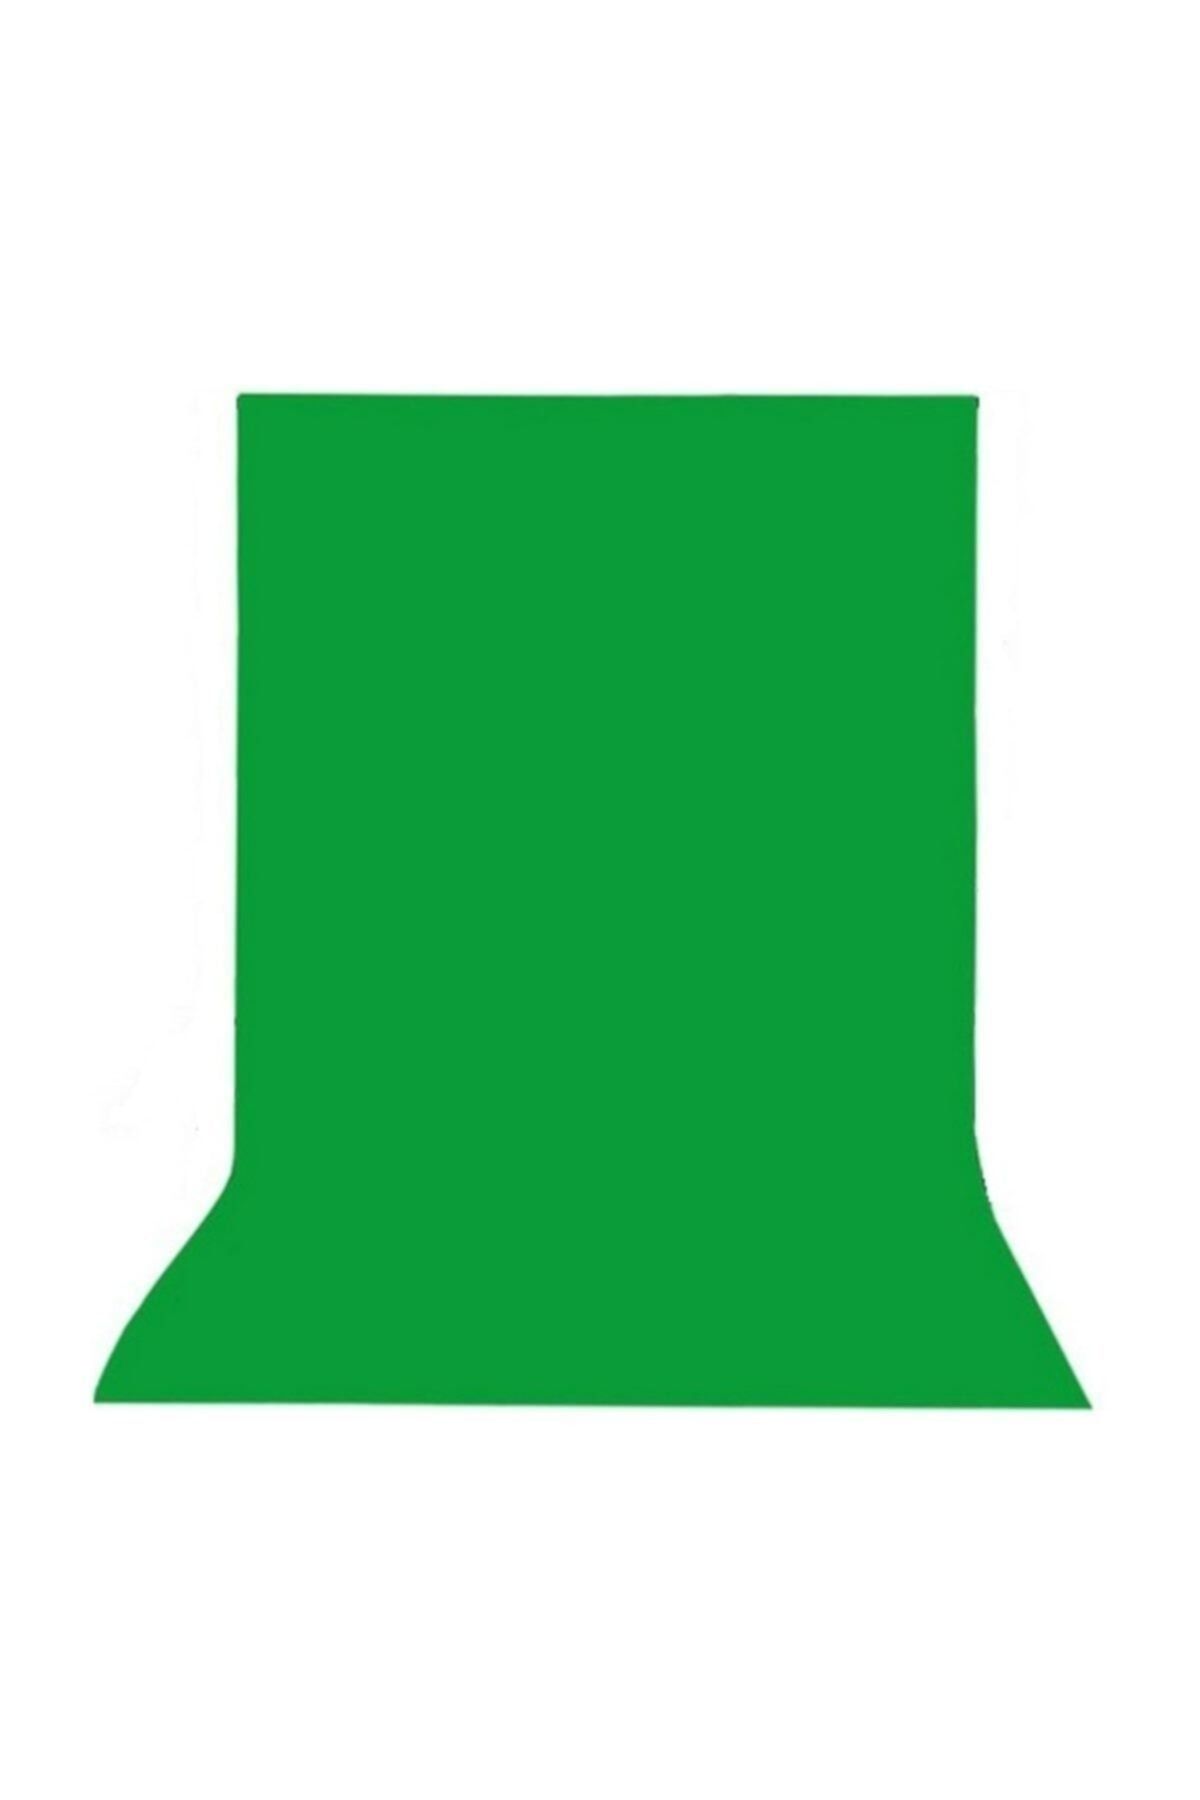 Efsane 400x160 Cm Greenbox Chromakey Green Screen Yeşil Fon Perde Kumaş Yeşil Arkaplan Iki Kat Orta Kalın